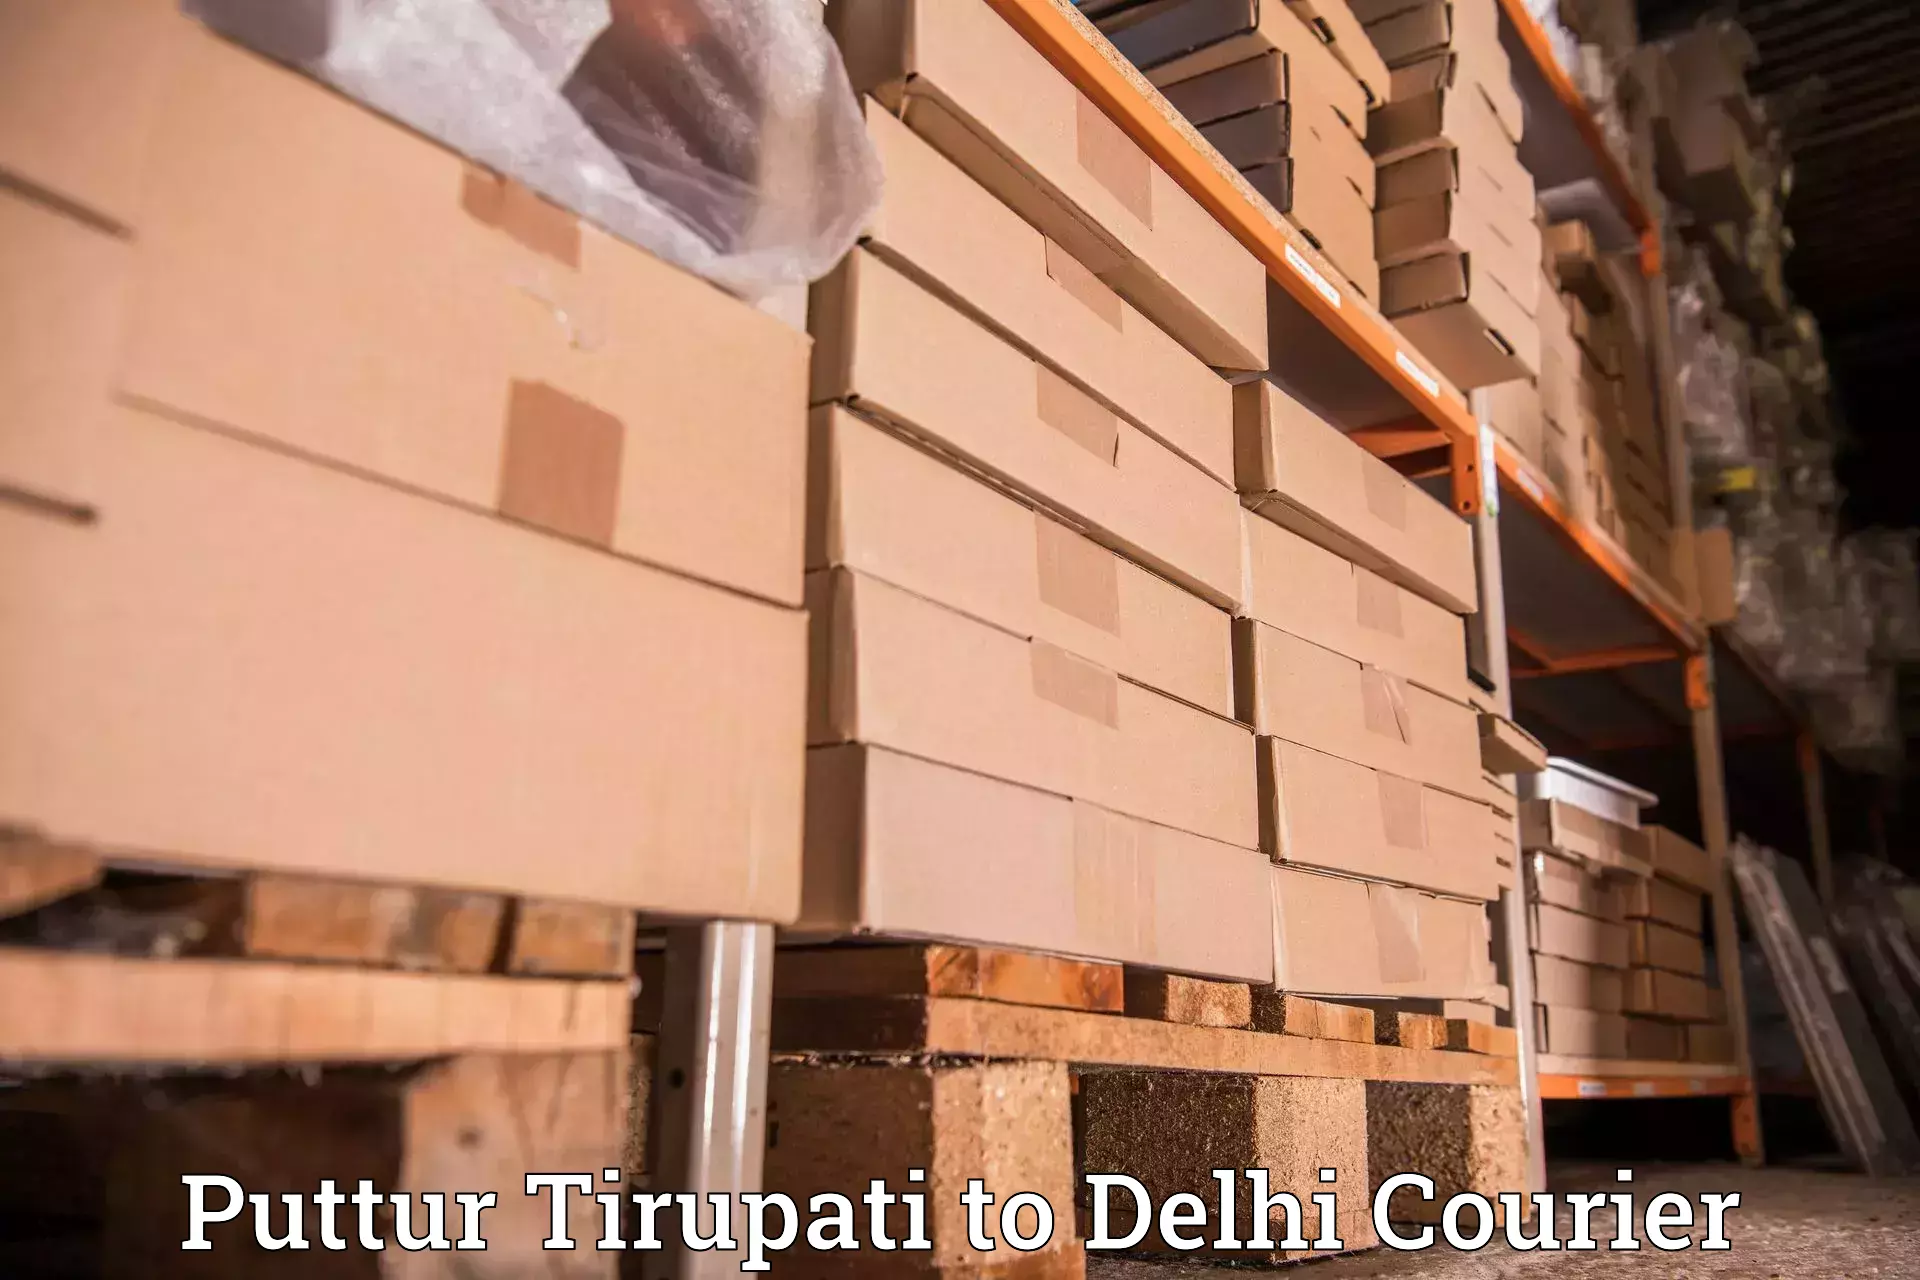 Cash on delivery service Puttur Tirupati to Kalkaji